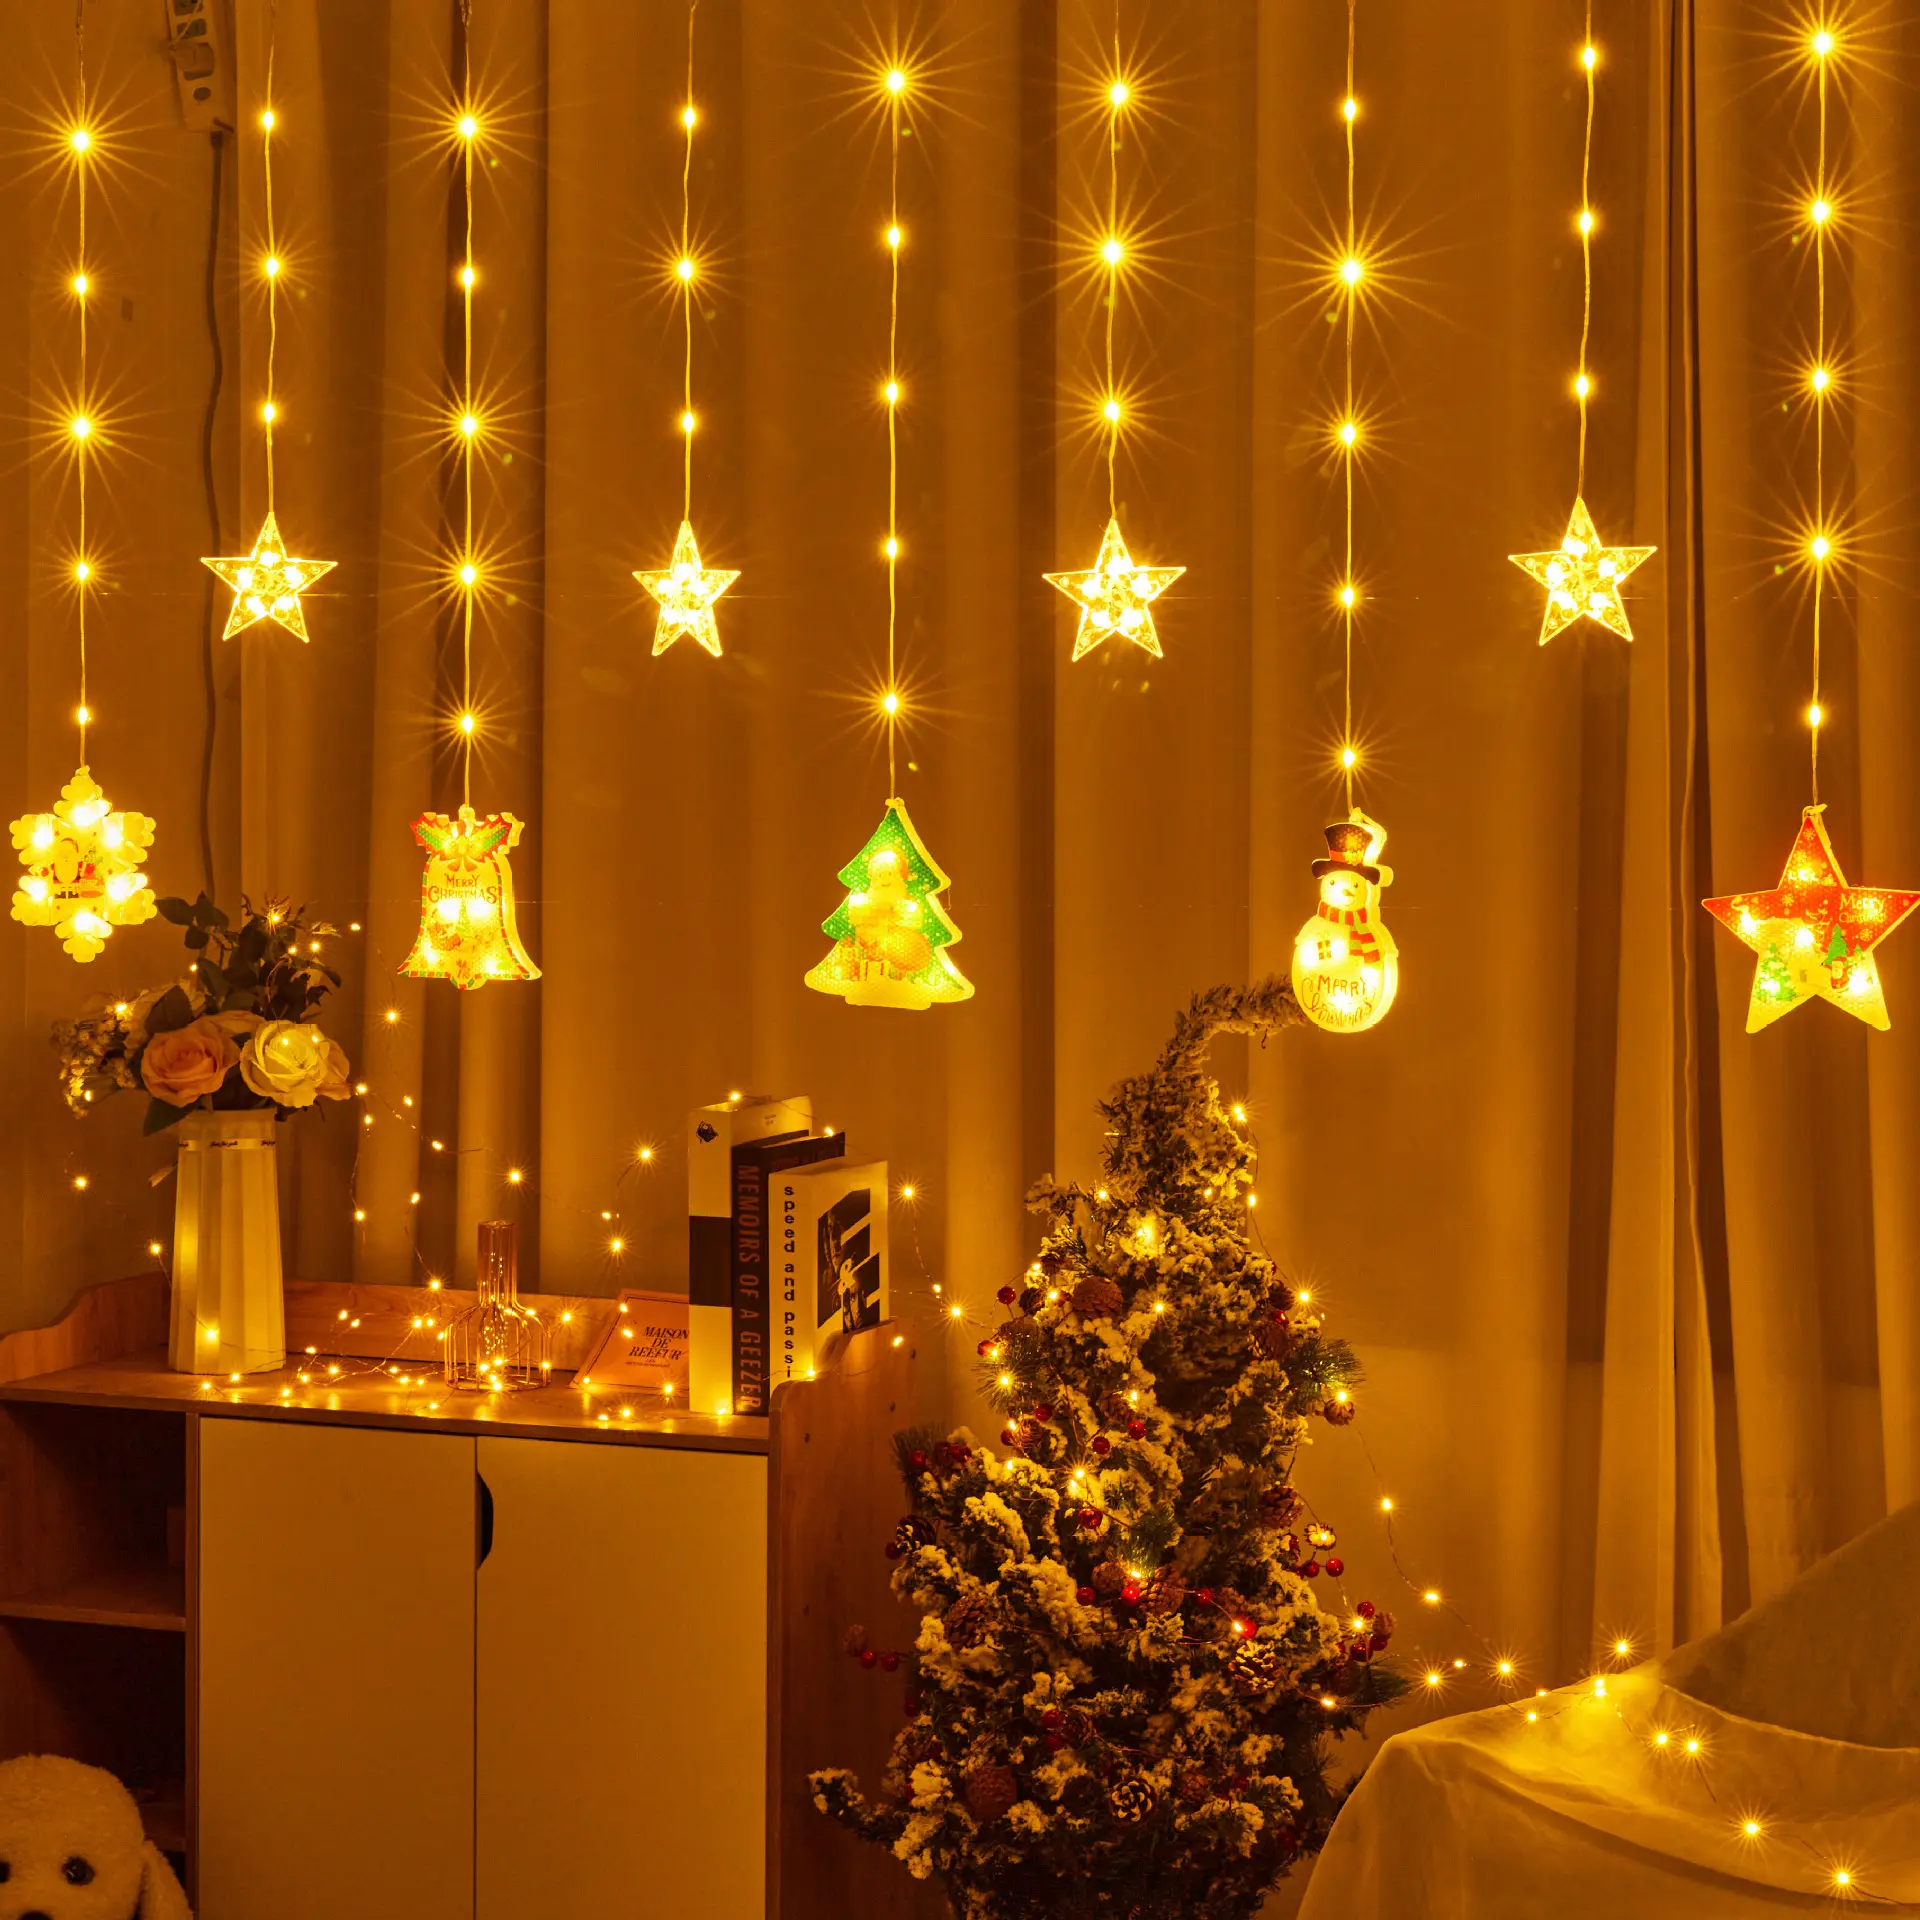 LEDカーテンフェアリーライトLEDクリスマスデコレーションラインストリングライトパーティーモールルームレイアウトウィンドウビューライト中庭